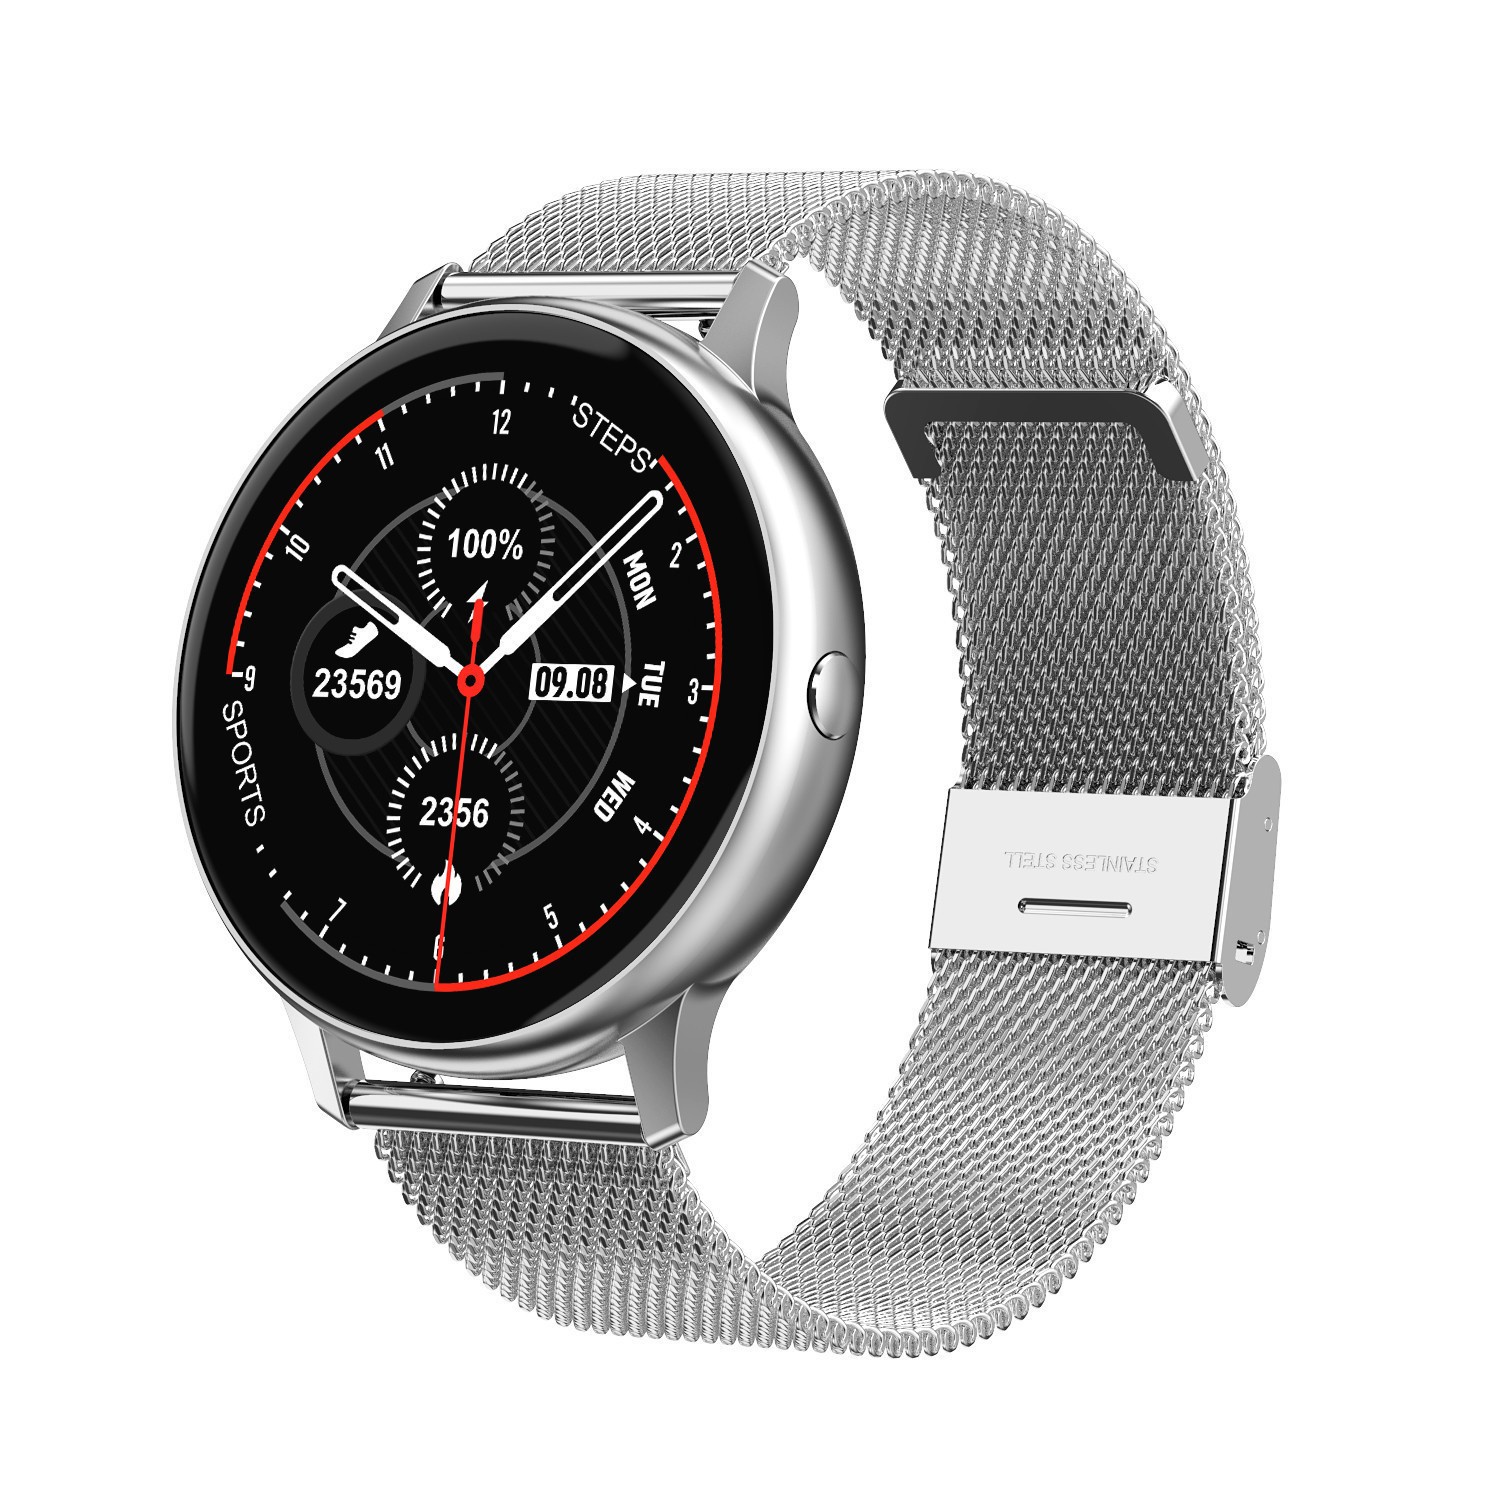 HUAWEI IWATCH OPPO XIAOMI 2020 ใหม่ DT88 Smartwatch IP68 อุปกรณ์สวมใส่กันน้ำ Heart Rate Monitor กีฬาสมาร์ทวอทช์สำหรับ Android IOS สแตนด์บายยาว